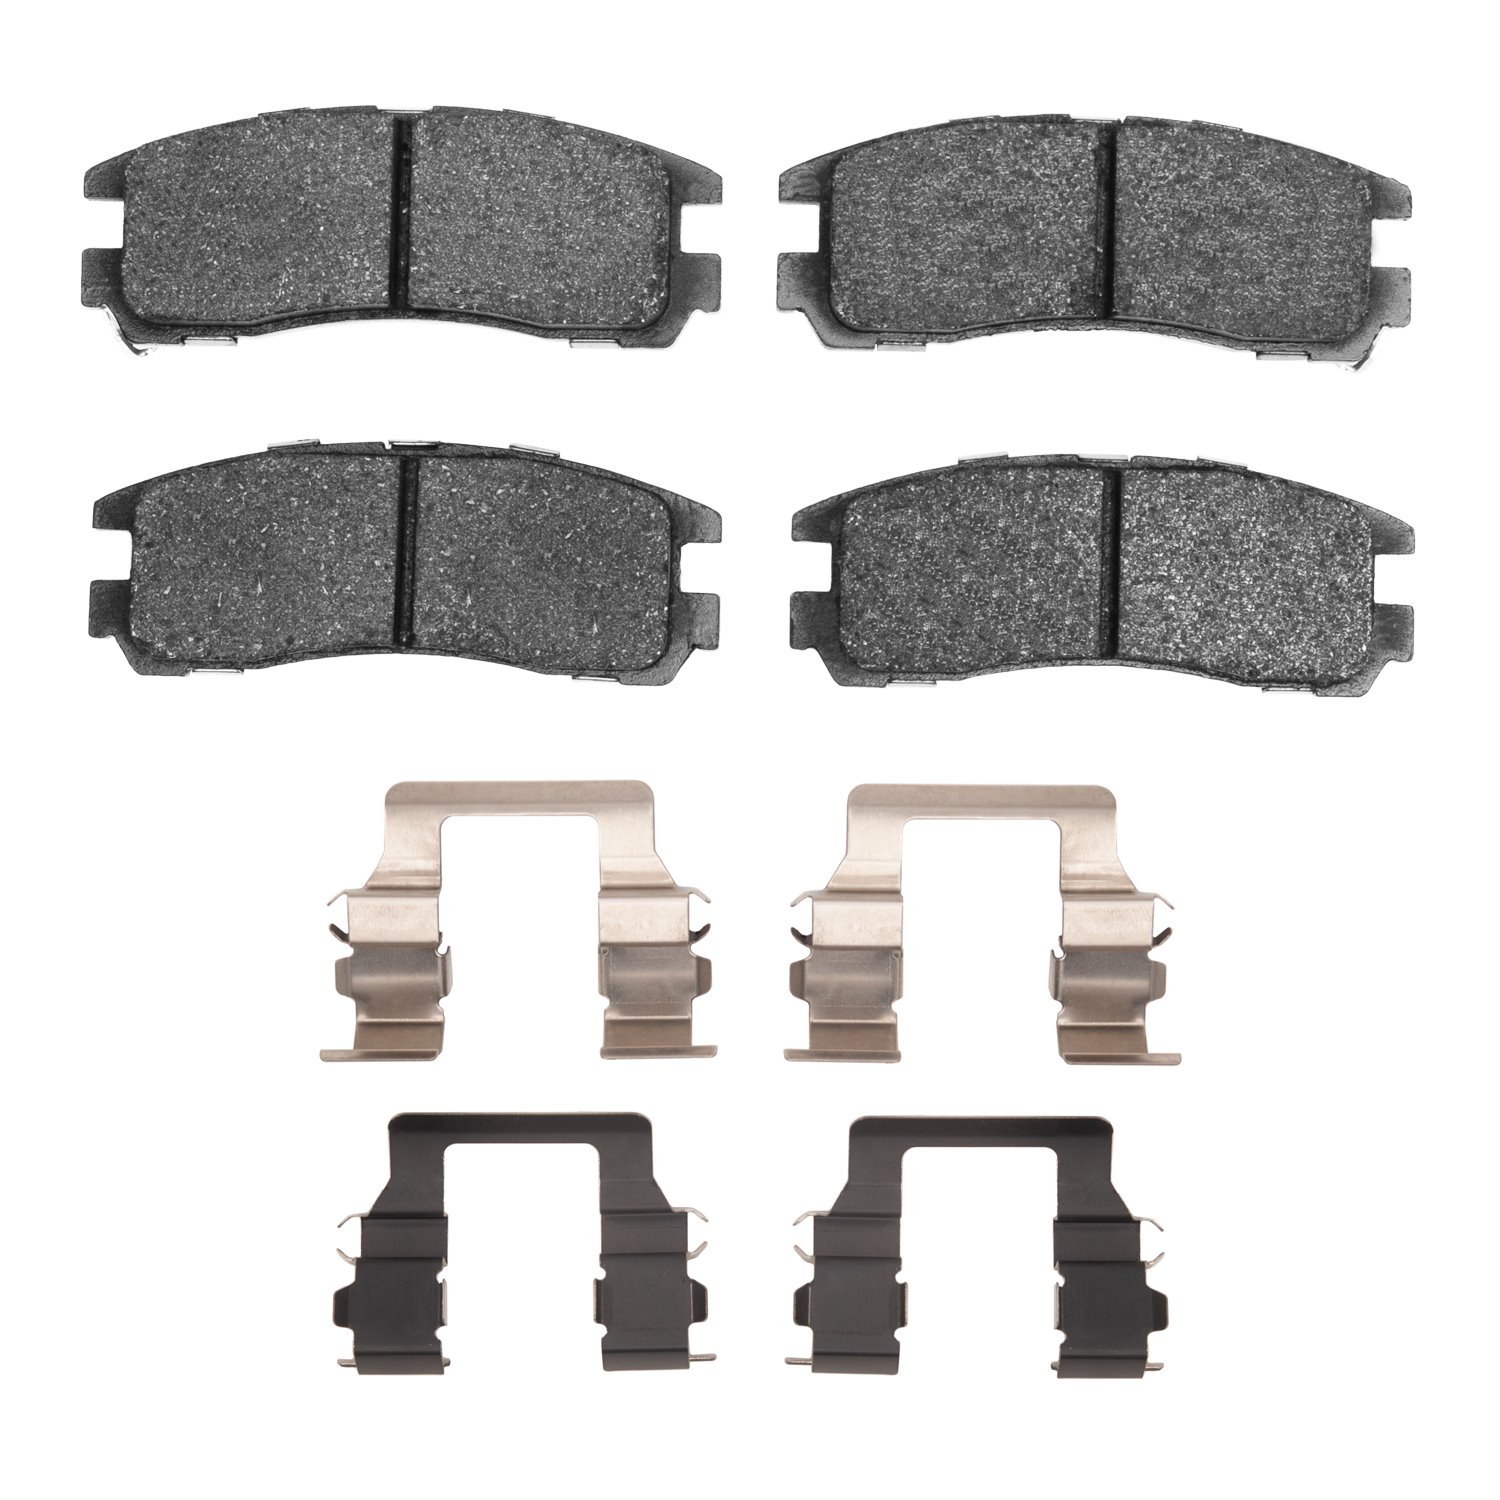 Ceramic Brake Pads & Hardware Kit, 1988-1999 Fits Multiple Makes/Models, Position: Rear